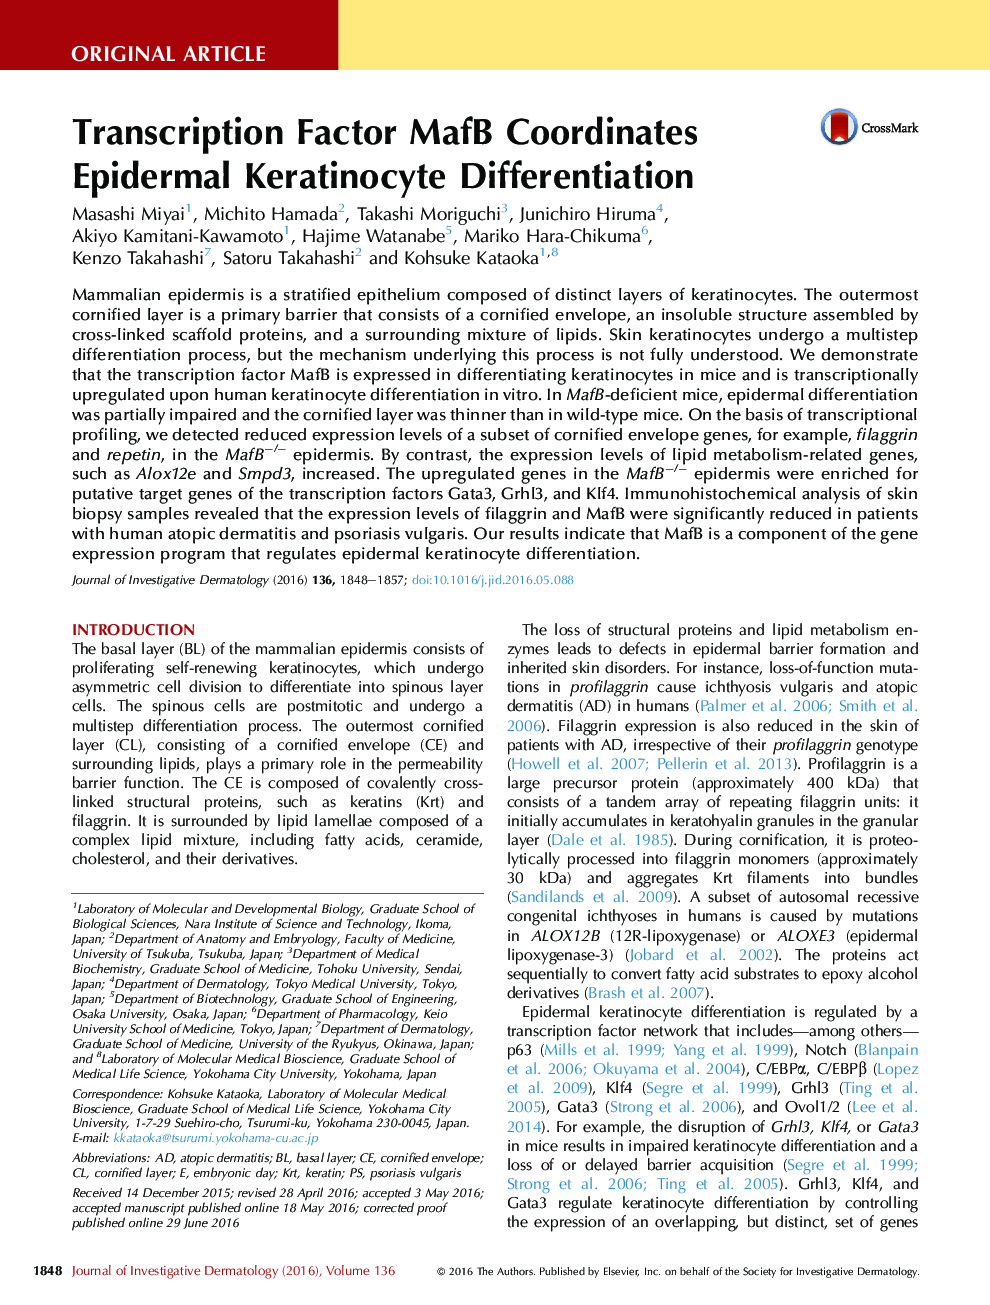 Transcription Factor MafB Coordinates Epidermal Keratinocyte Differentiation